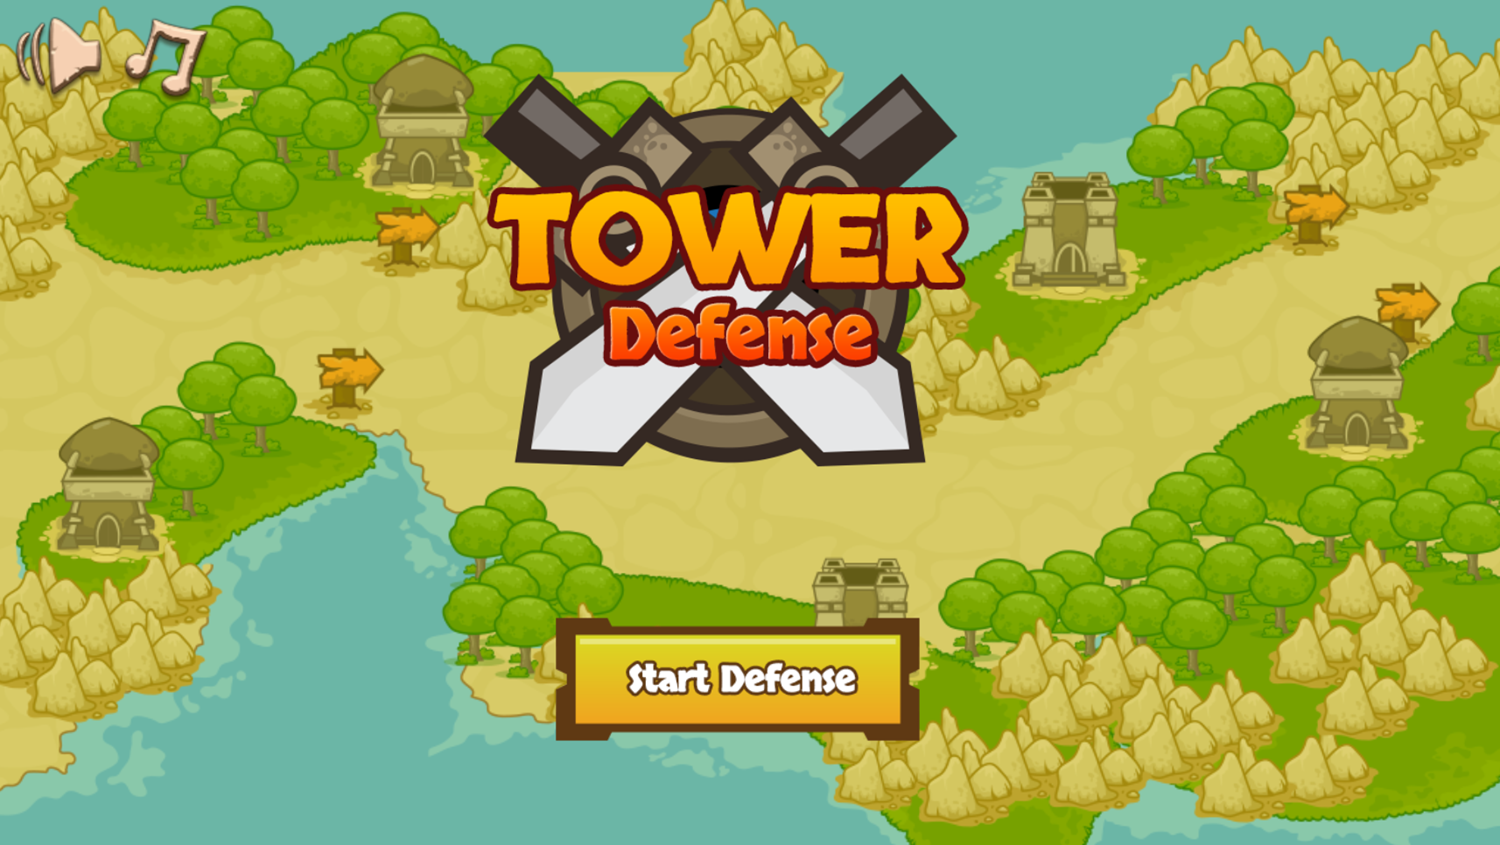 Tower Defense Game Welcome Screen Screenshot.